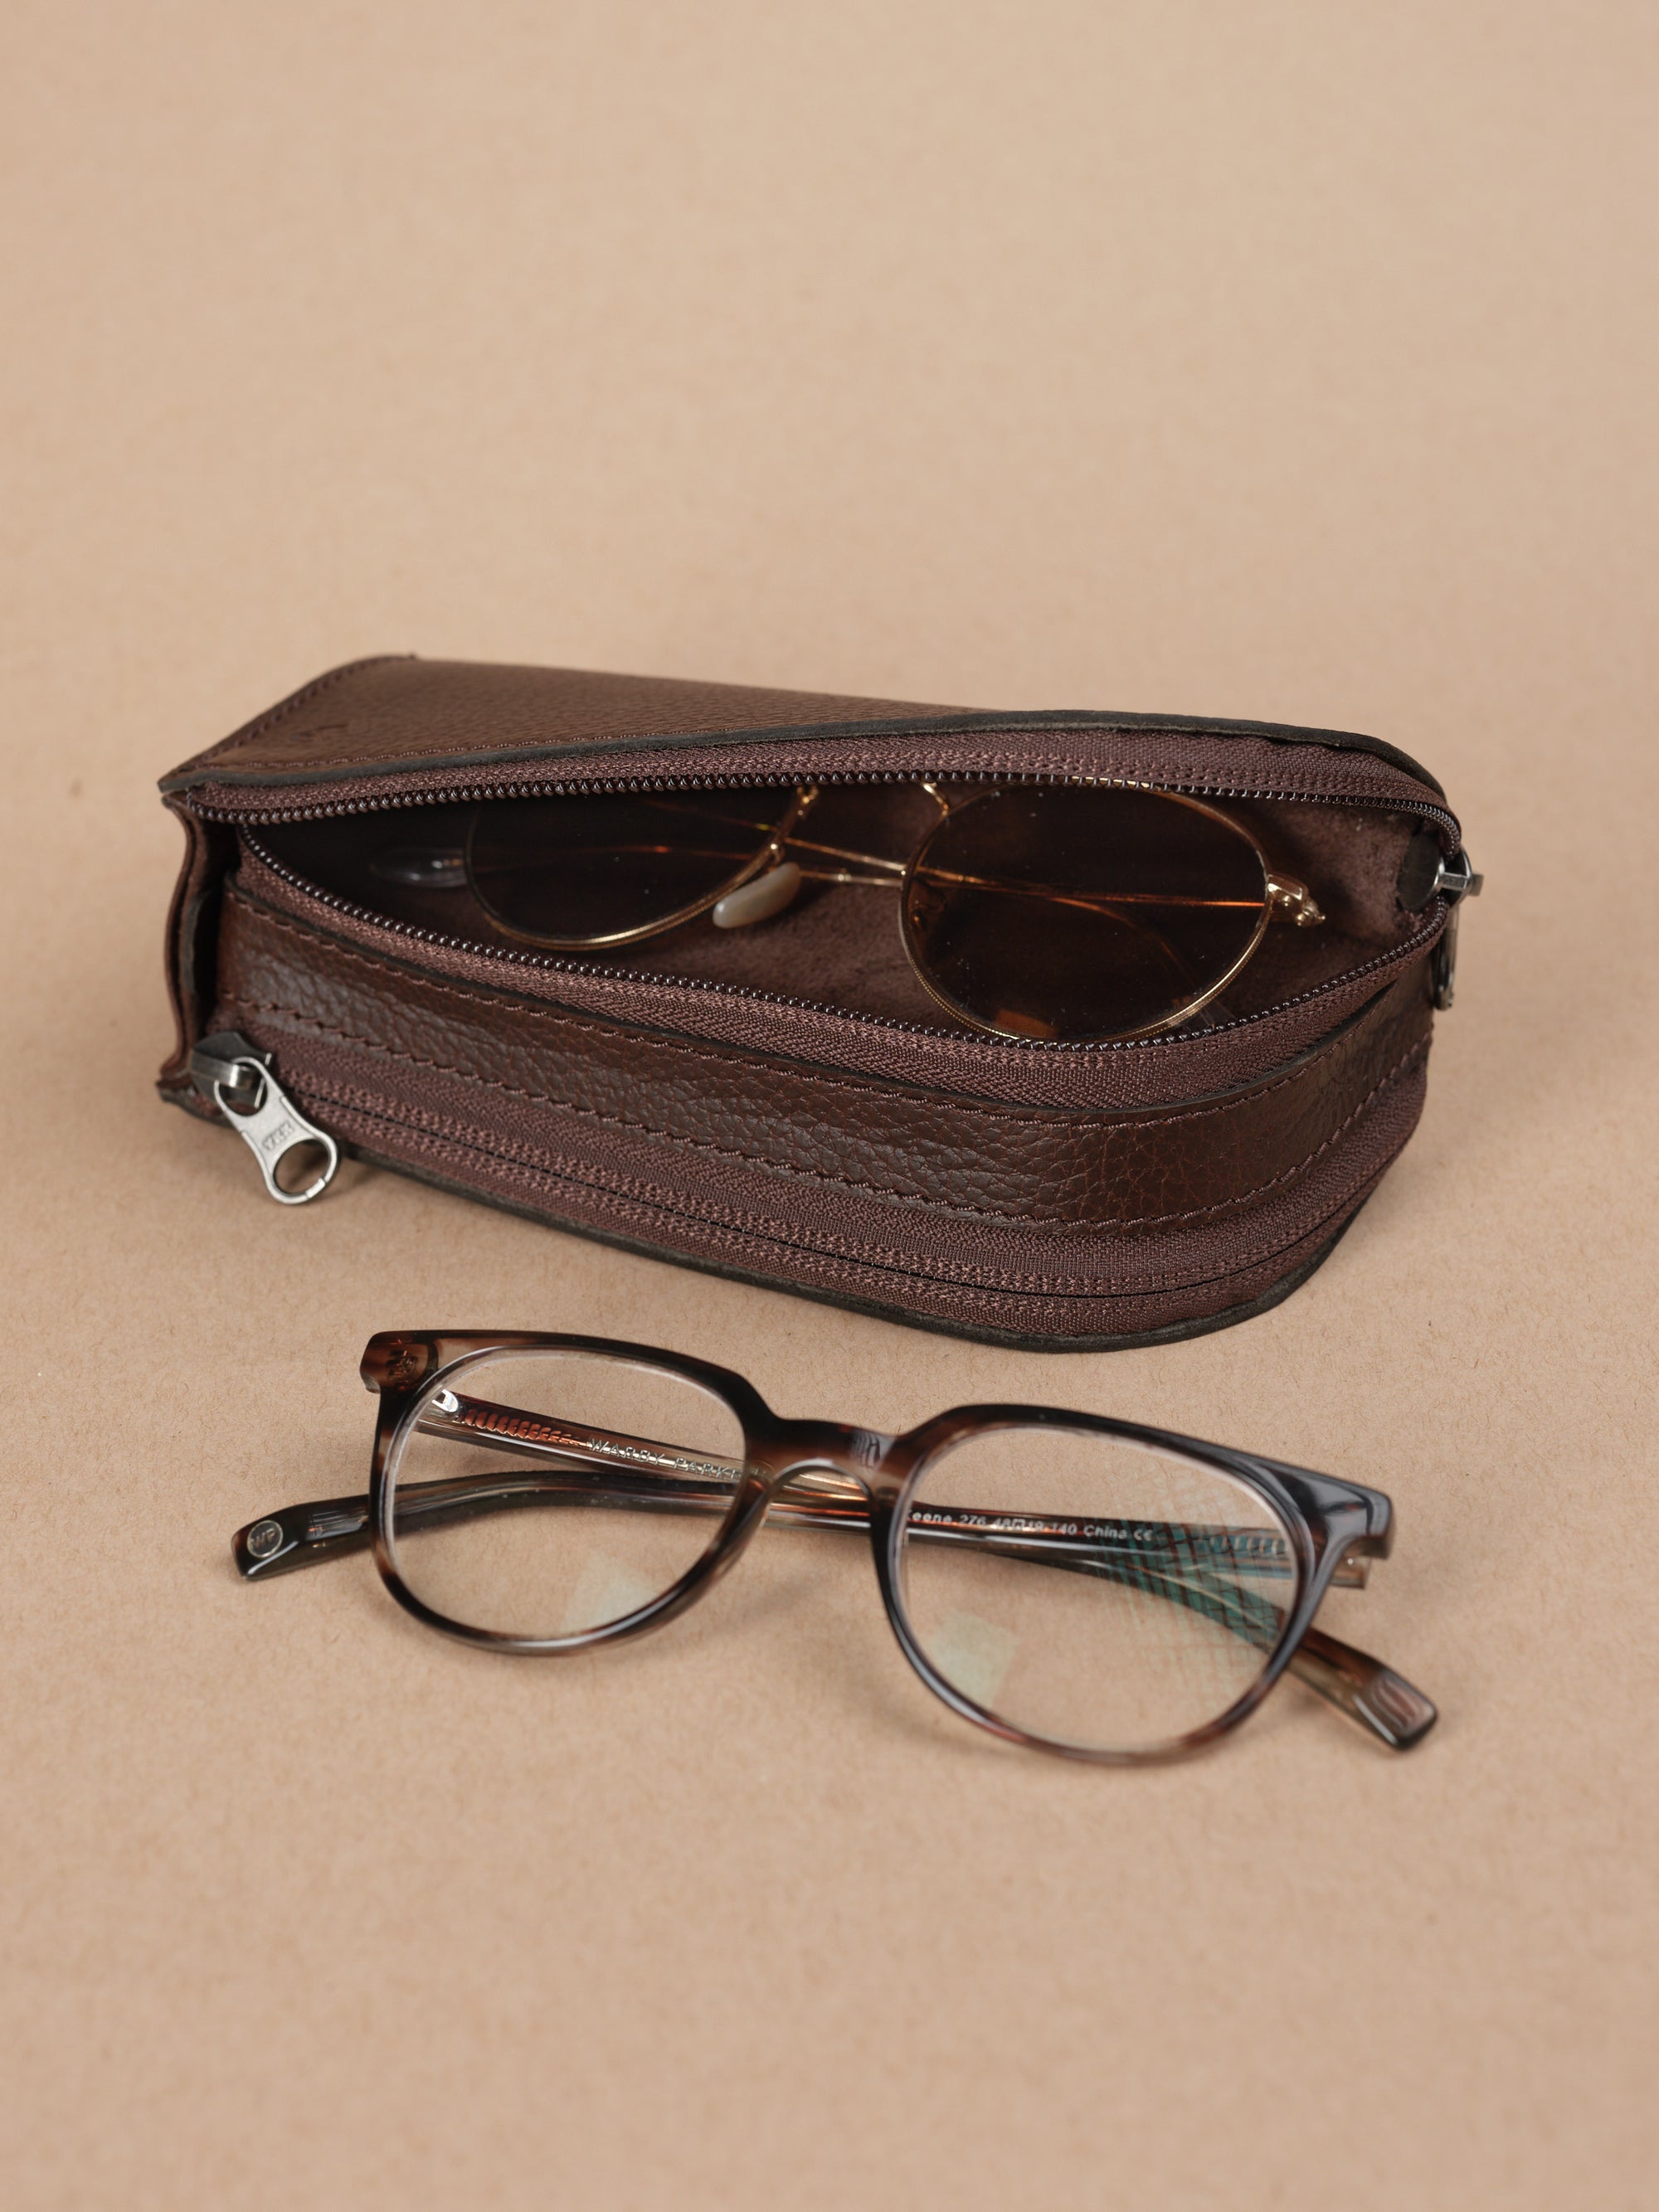 Dual eyeglass case by Capra Leather